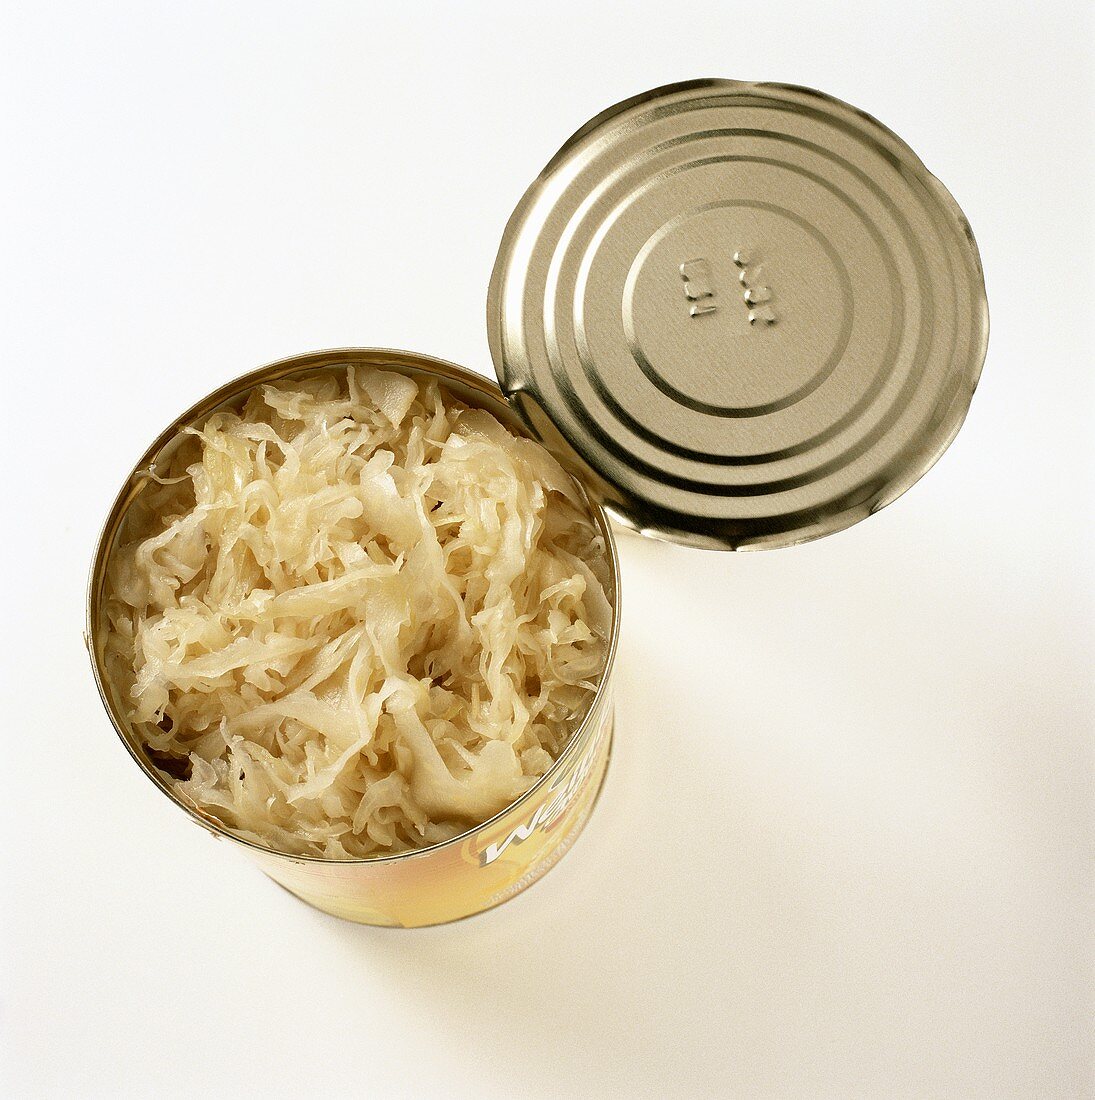 Sauerkraut in a tin